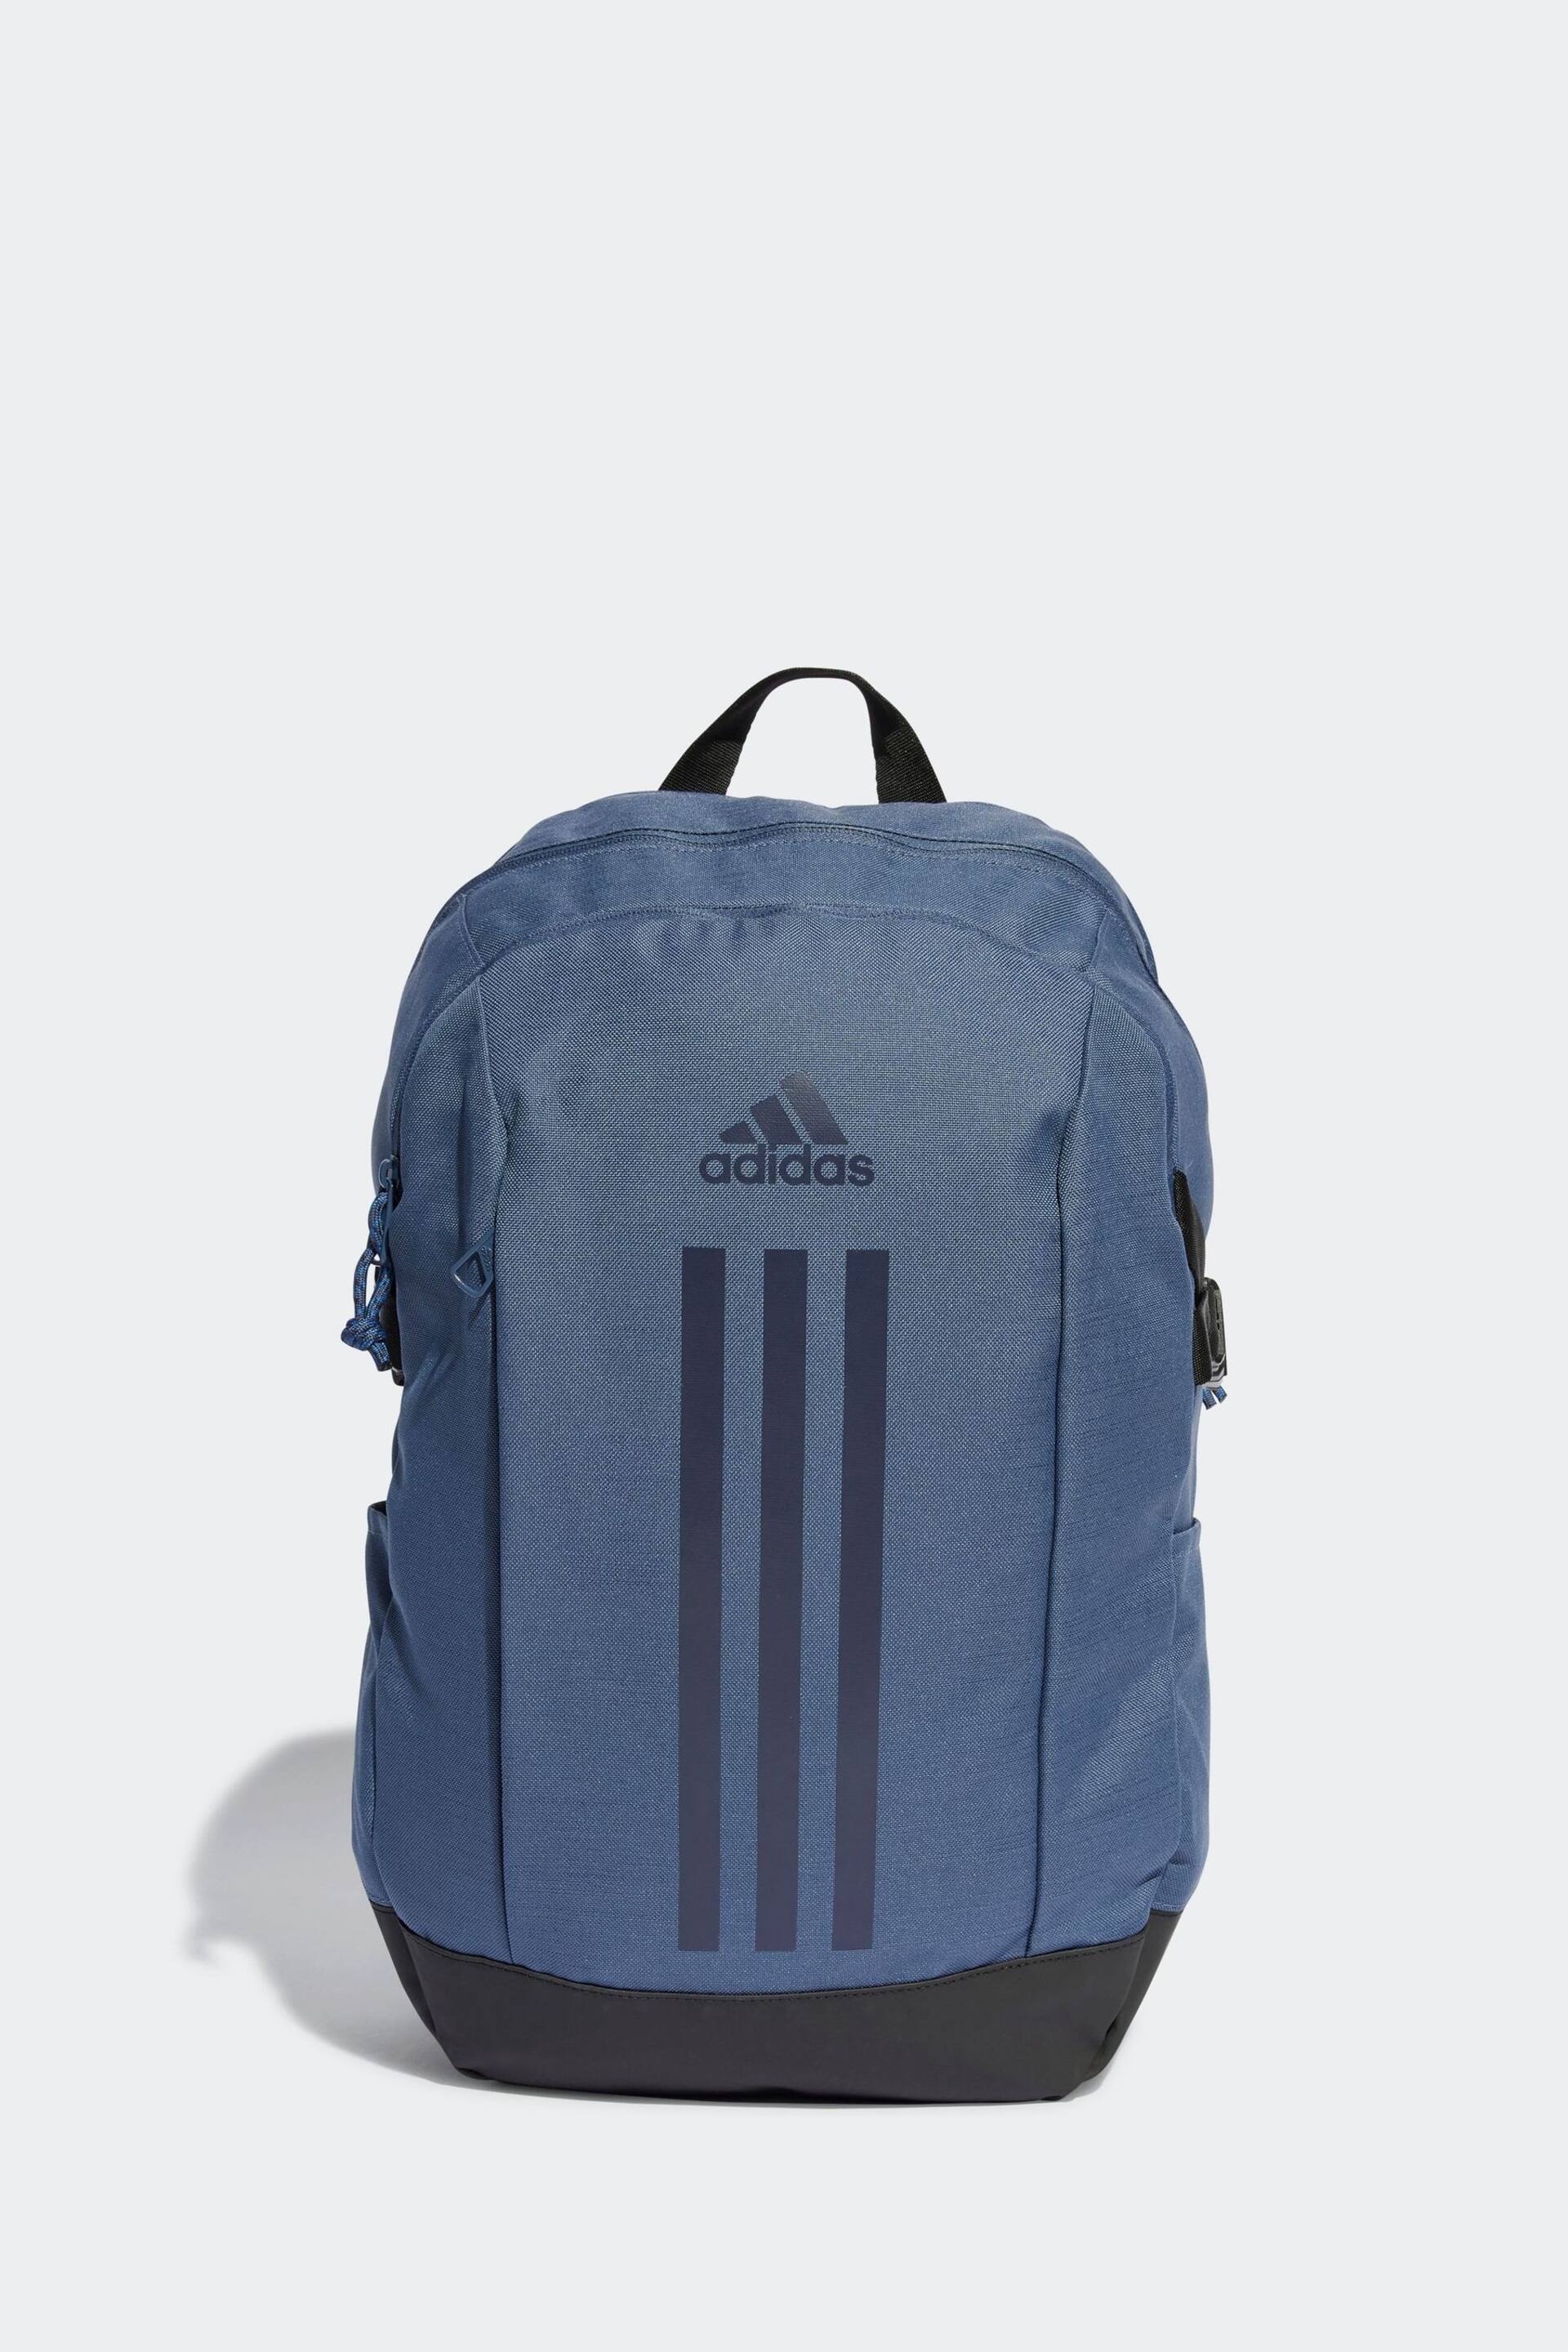 adidas Blue Power Backpack - Image 4 of 5